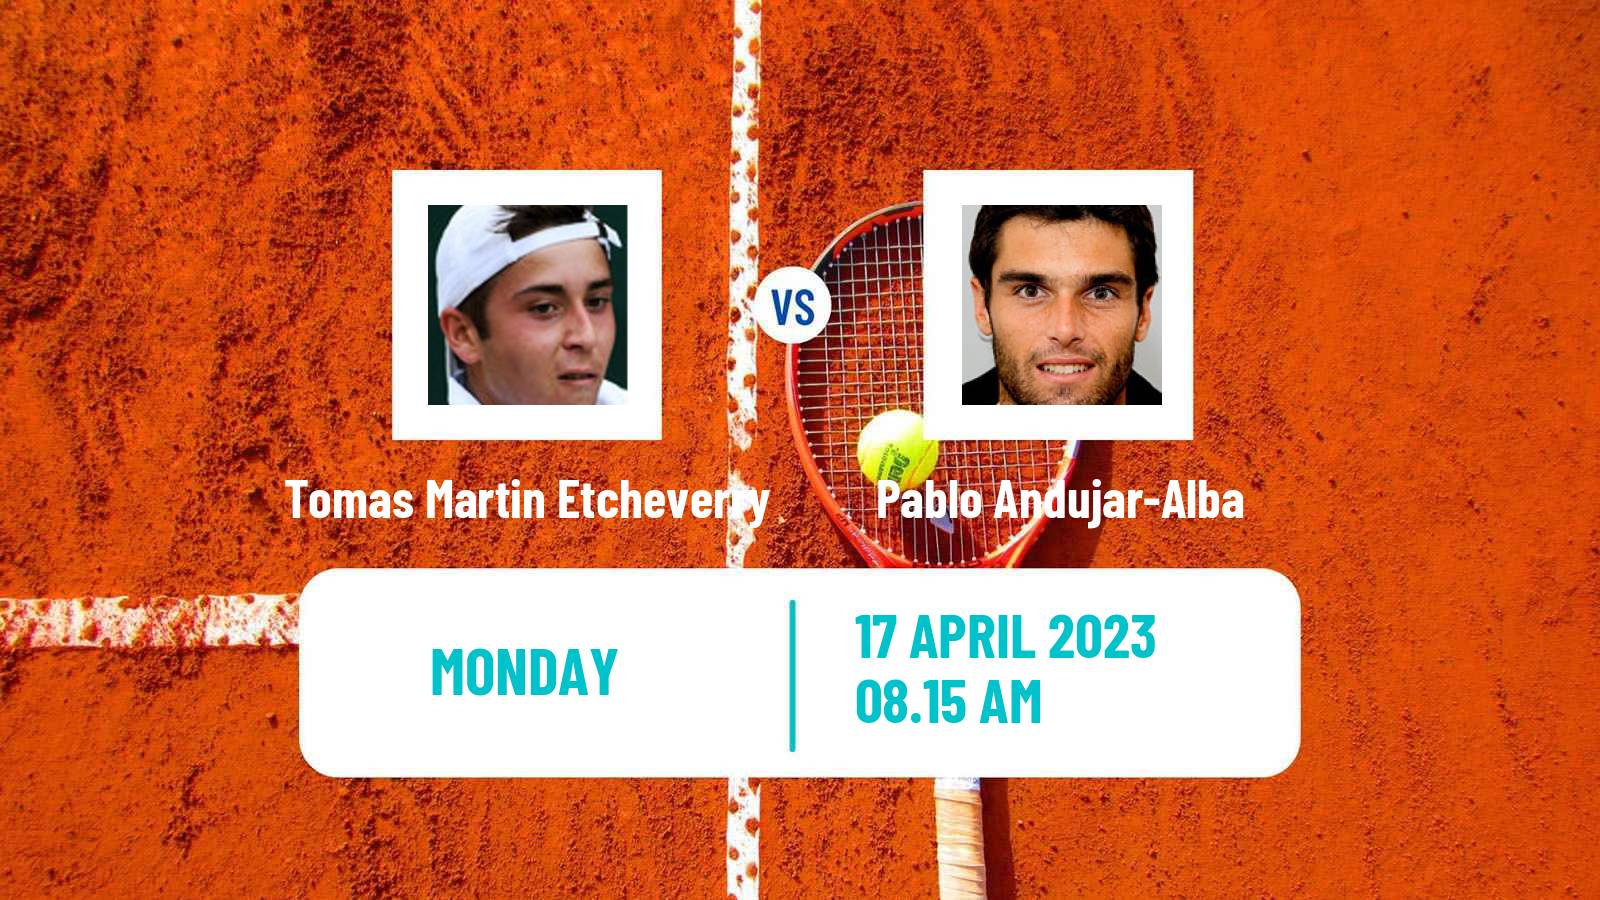 Tennis ATP Barcelona Tomas Martin Etcheverry - Pablo Andujar-Alba